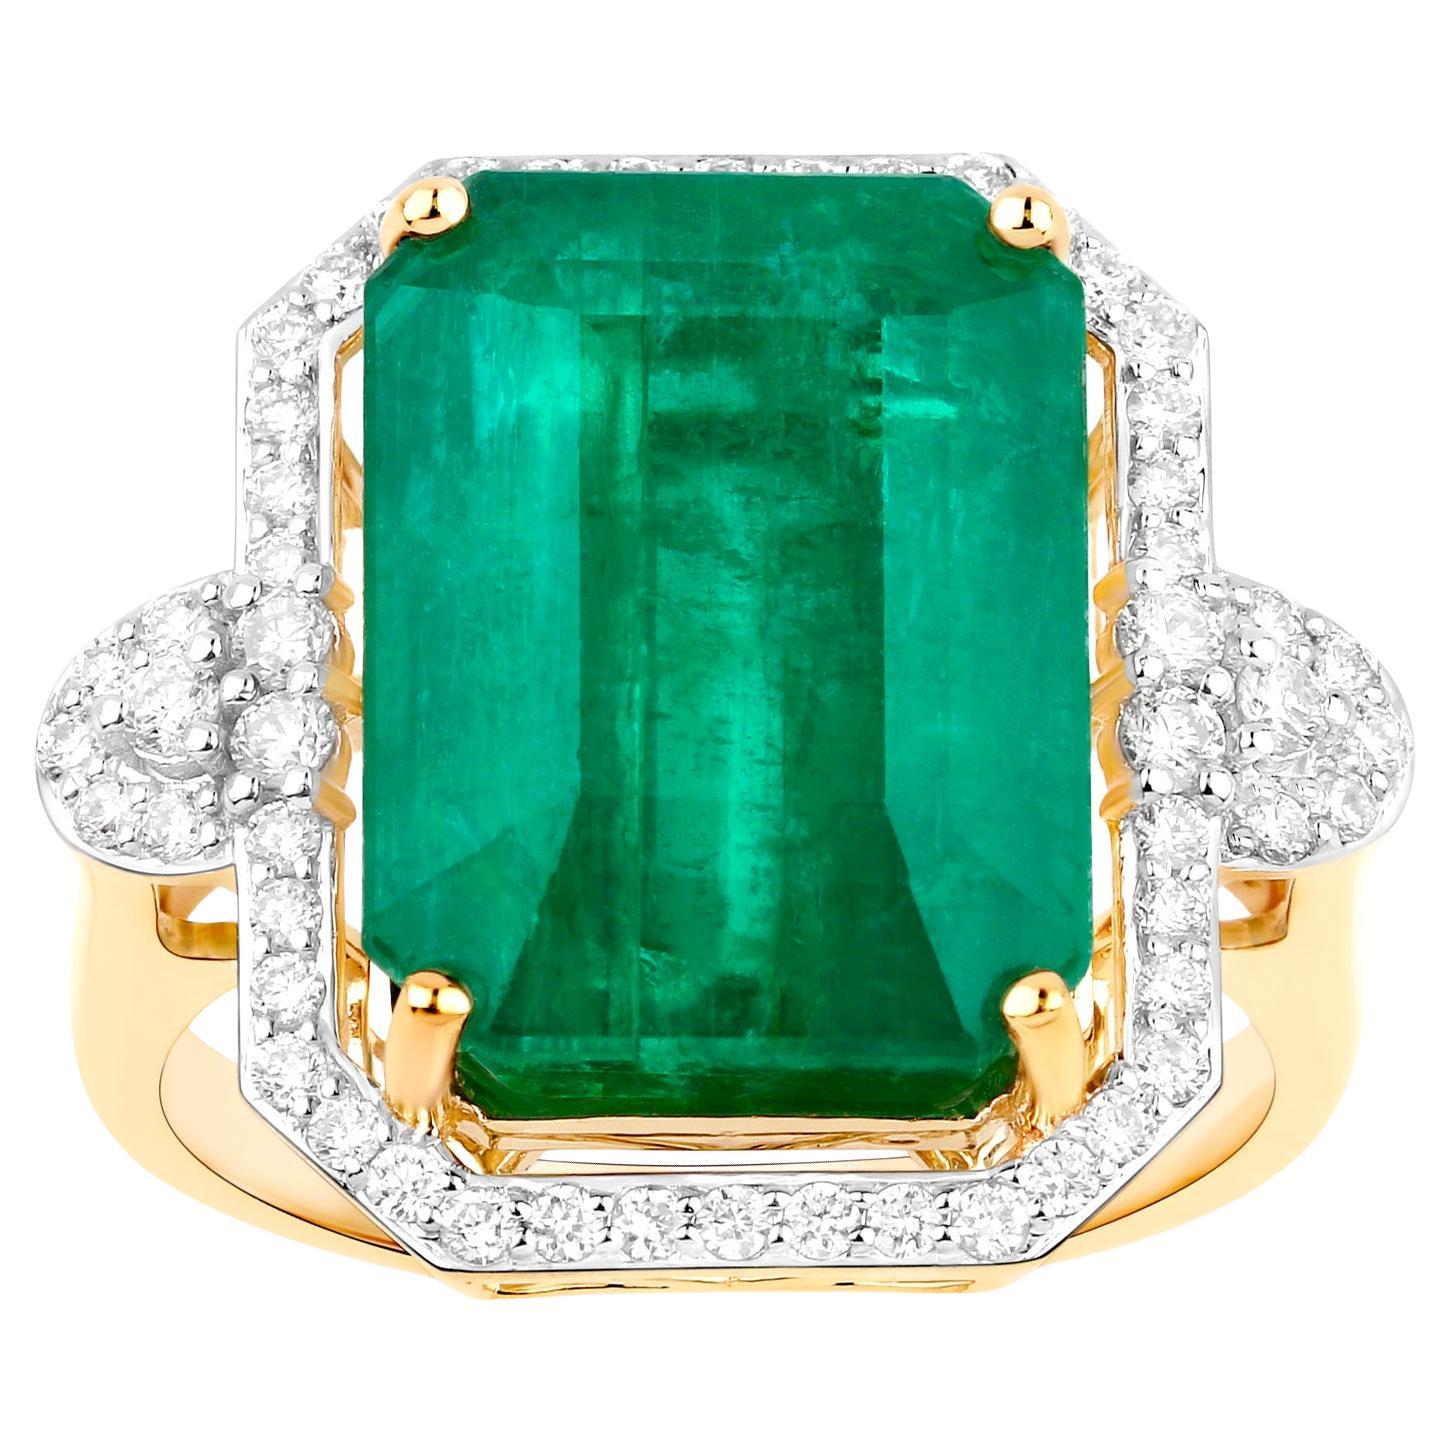 IGI Certified Zambian Emerald Ring Diamond Setting 12 Carats 14K Yellow Gold For Sale